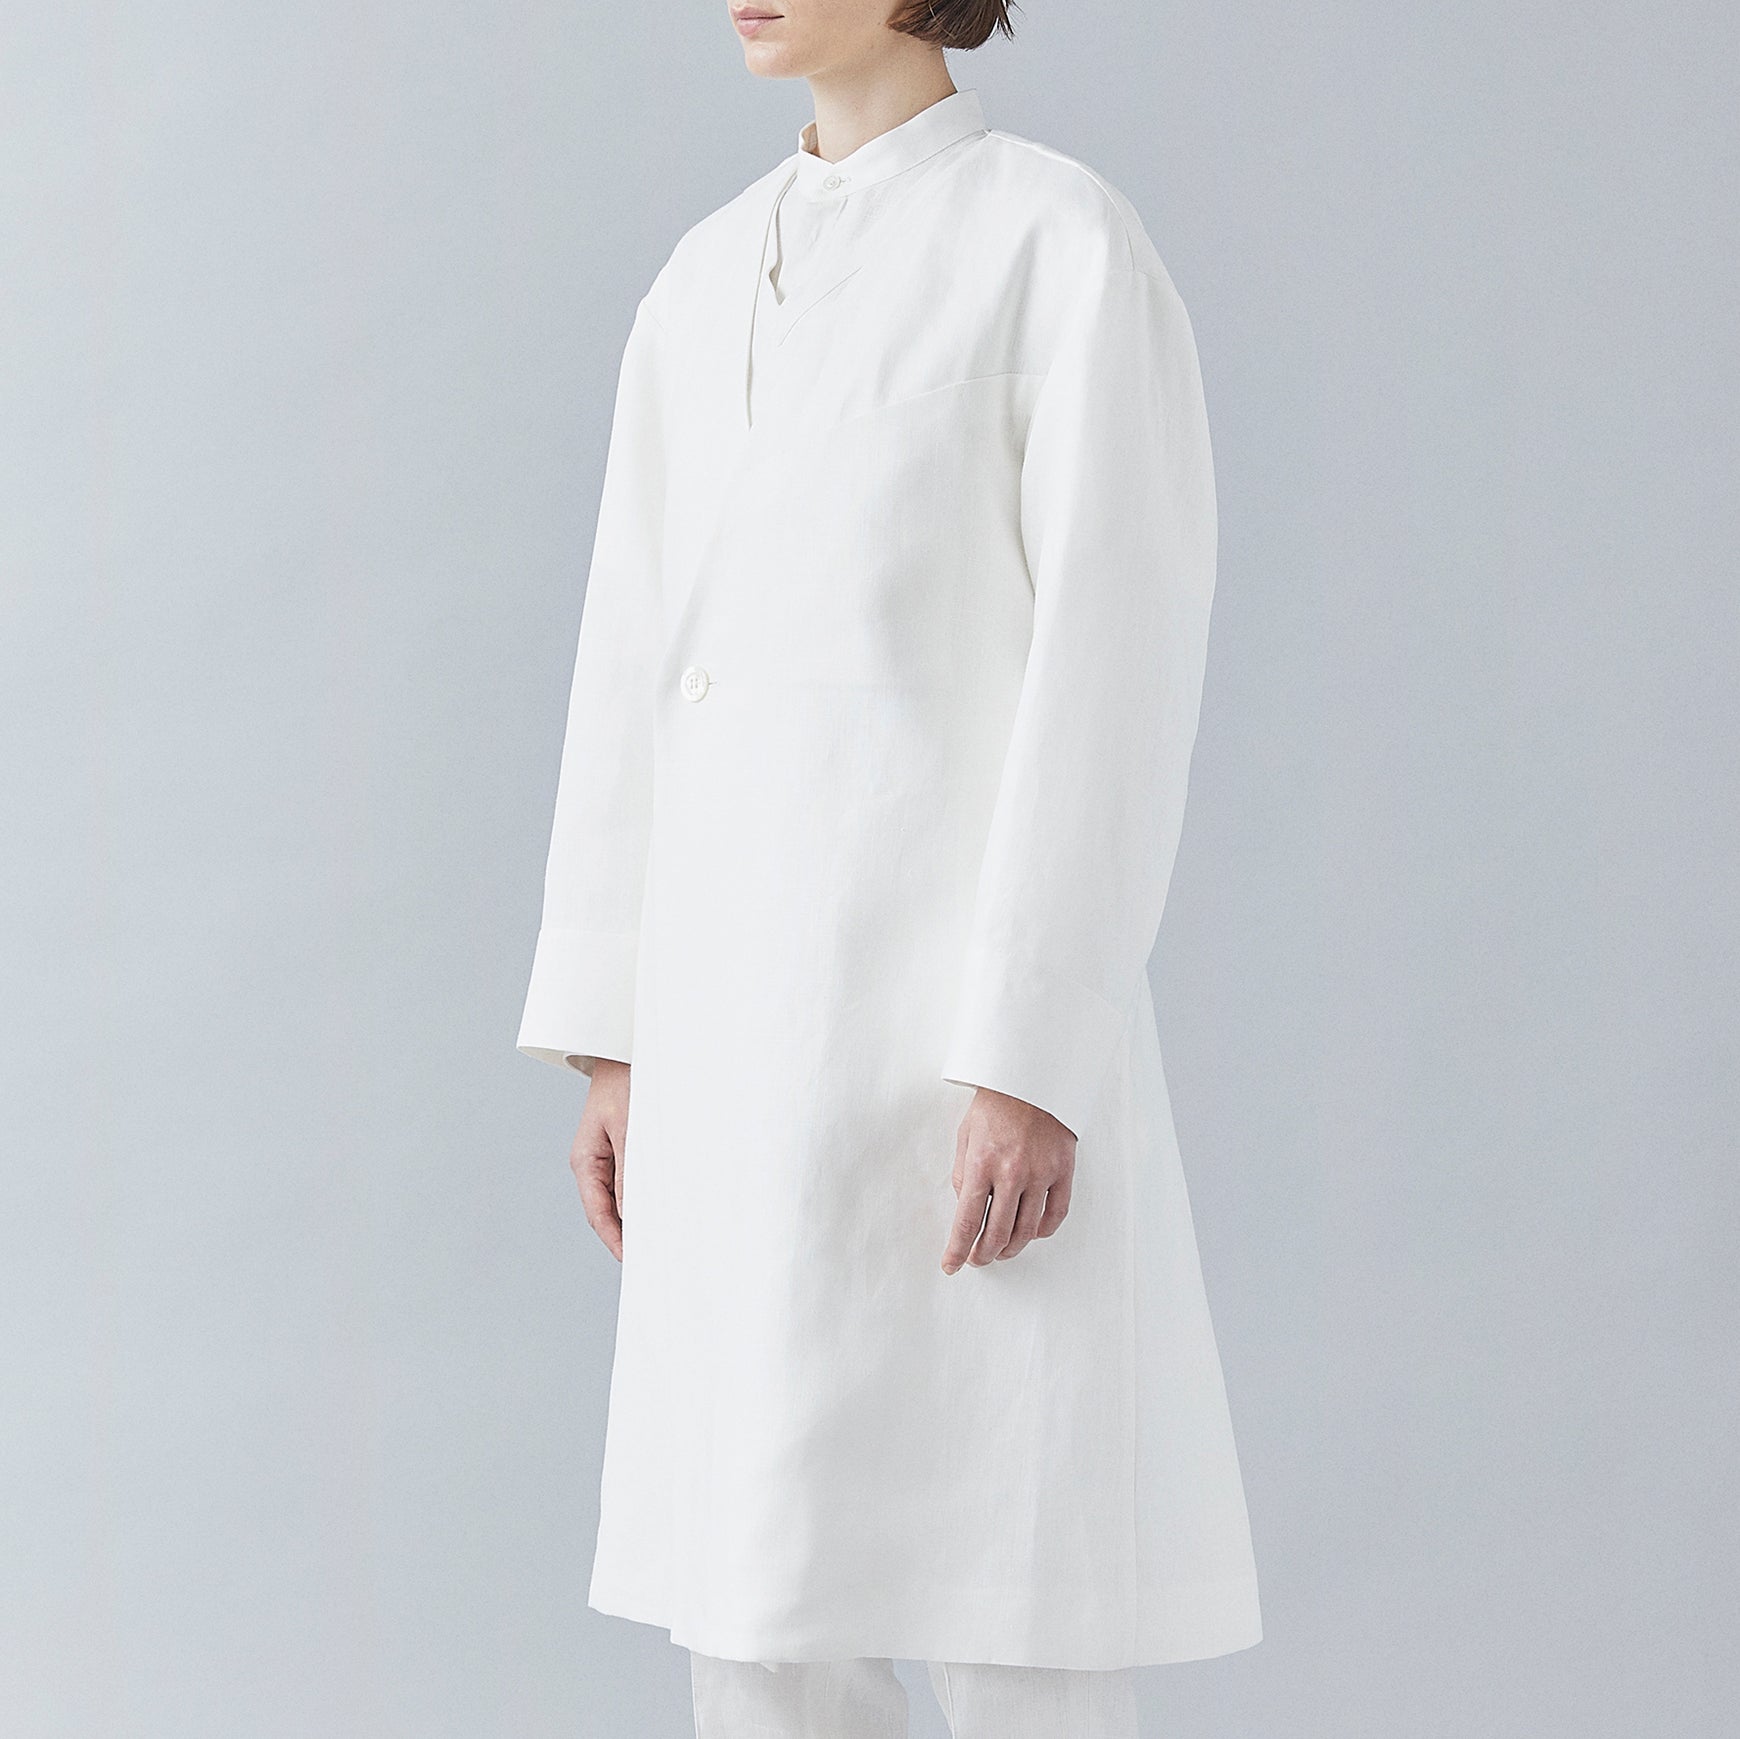 Atelier Robe Coat (White)